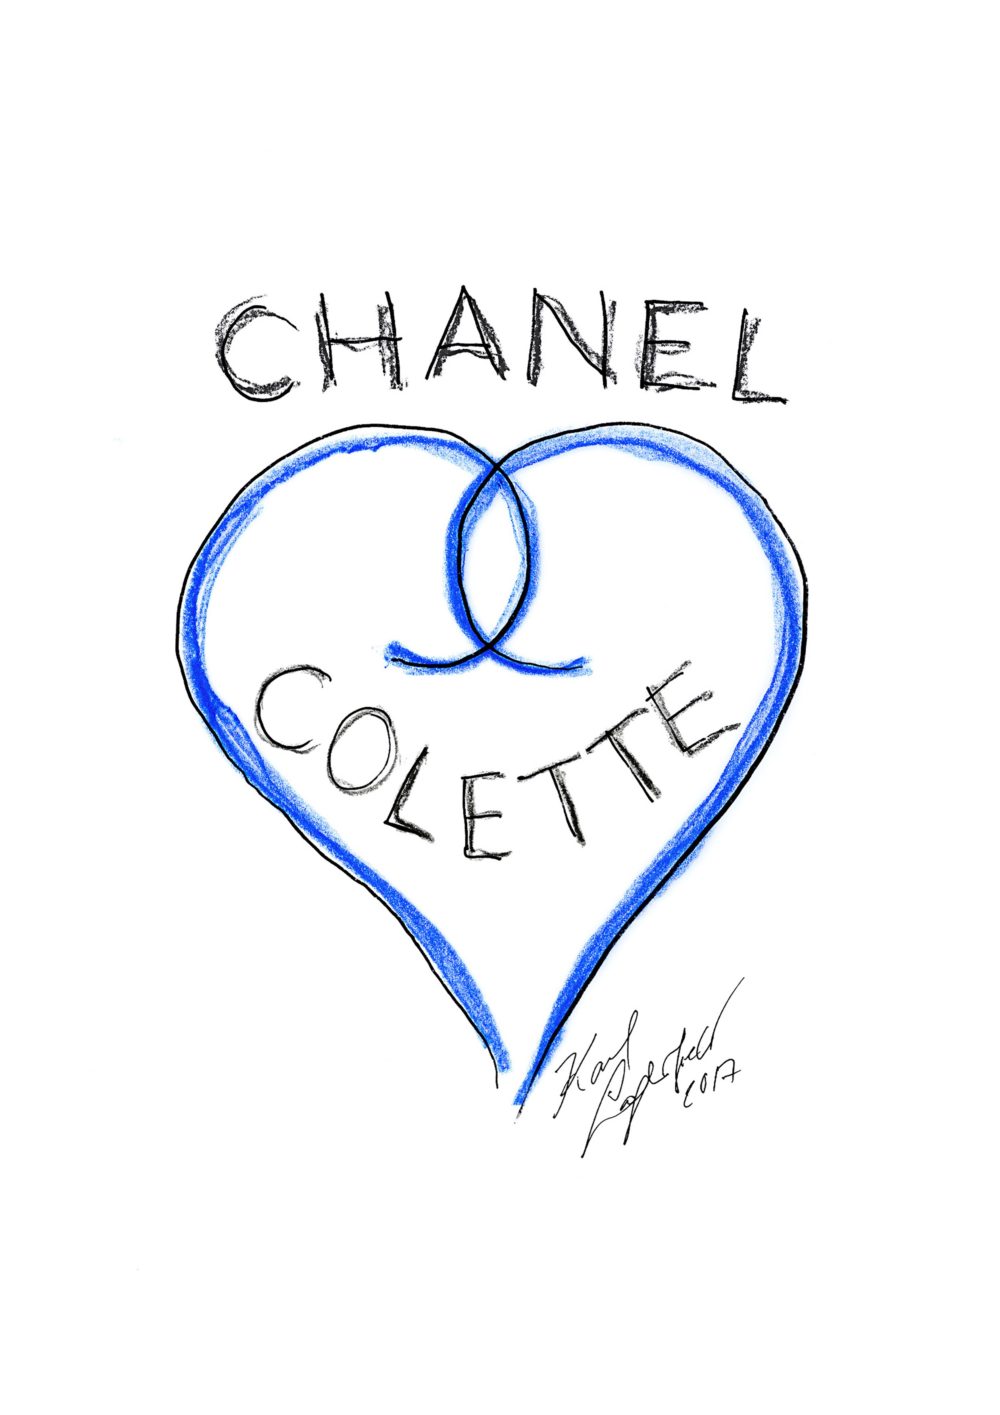 Colette cierra con broche de… Chanel